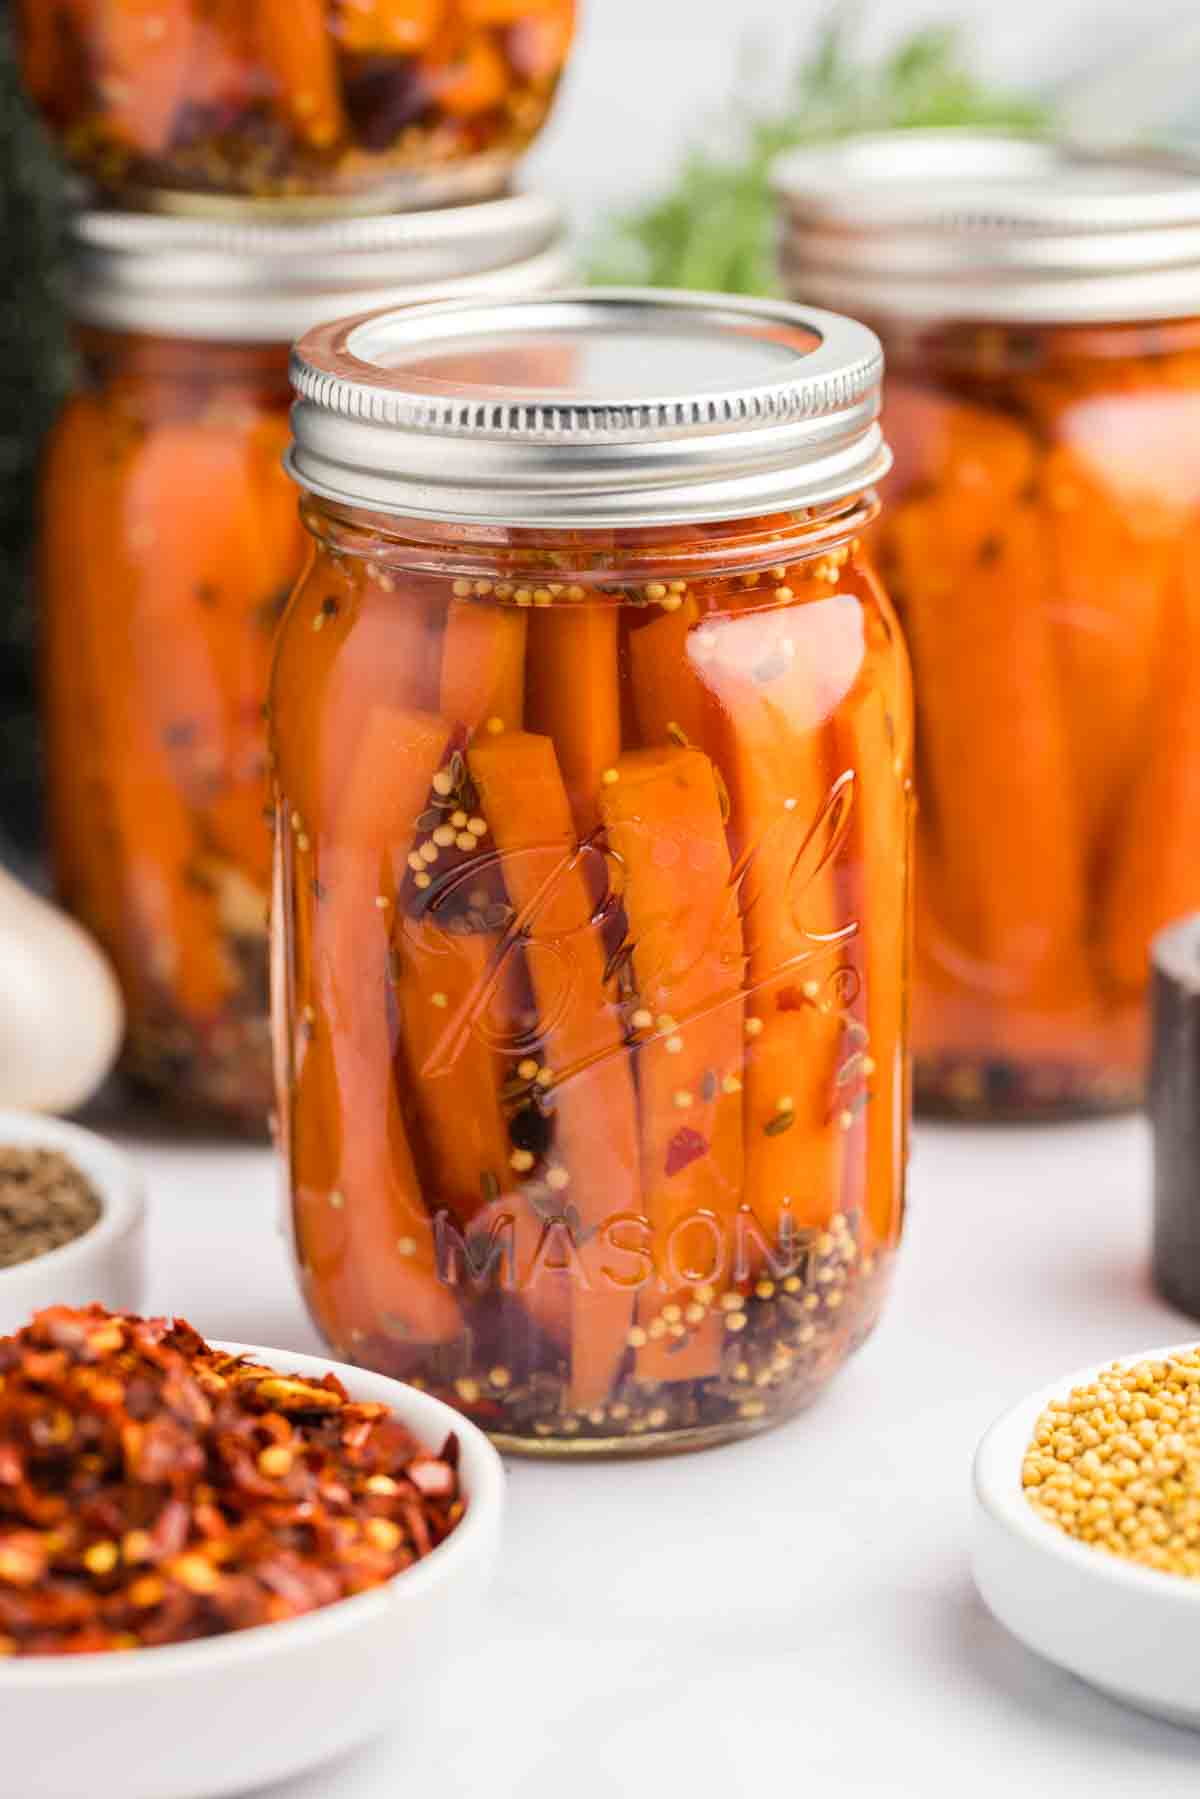 Pickled Carrots Recipe shown in jars. 